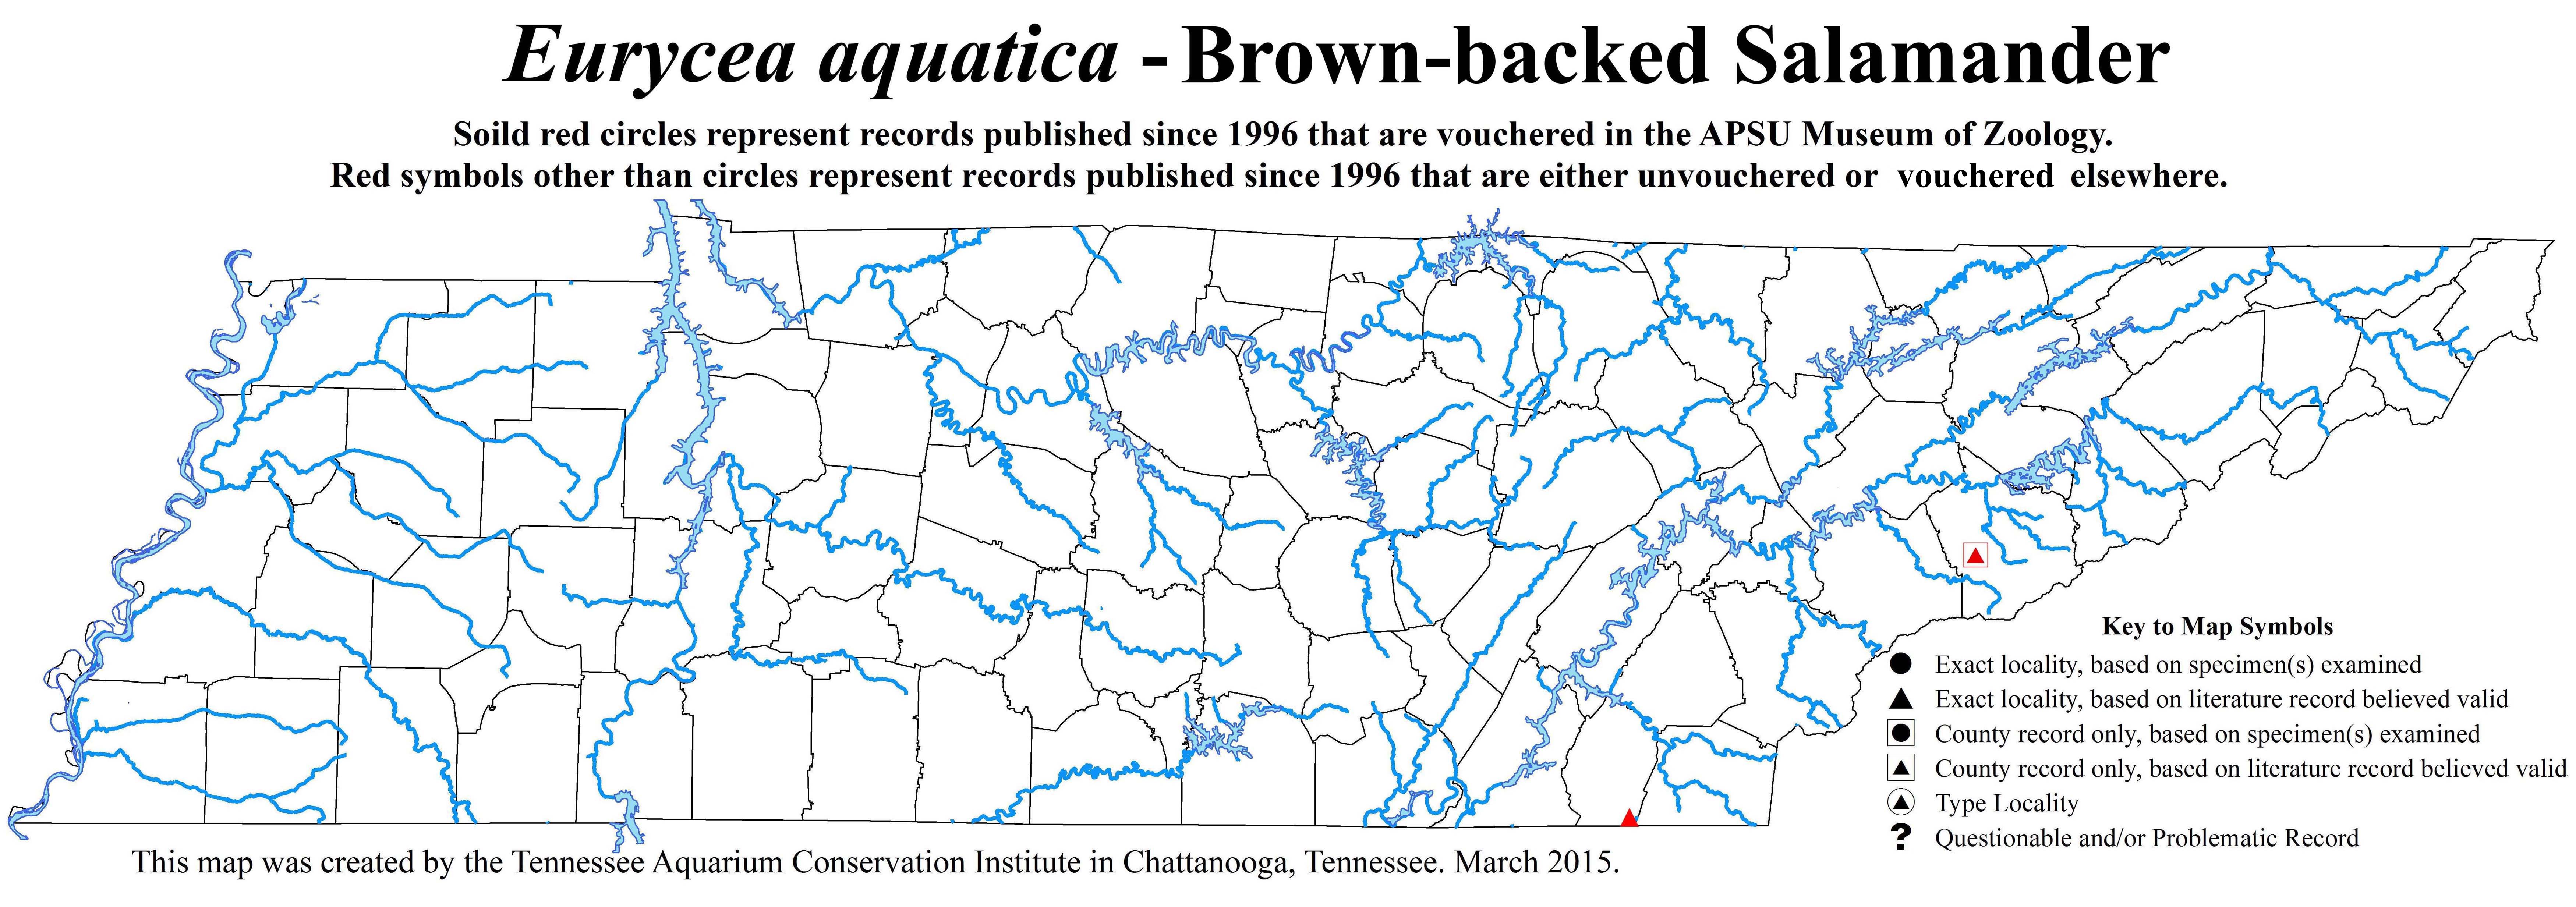 New Distribution Map - Eurycea aquatica Rose and Bush - Brown-backed Salamander